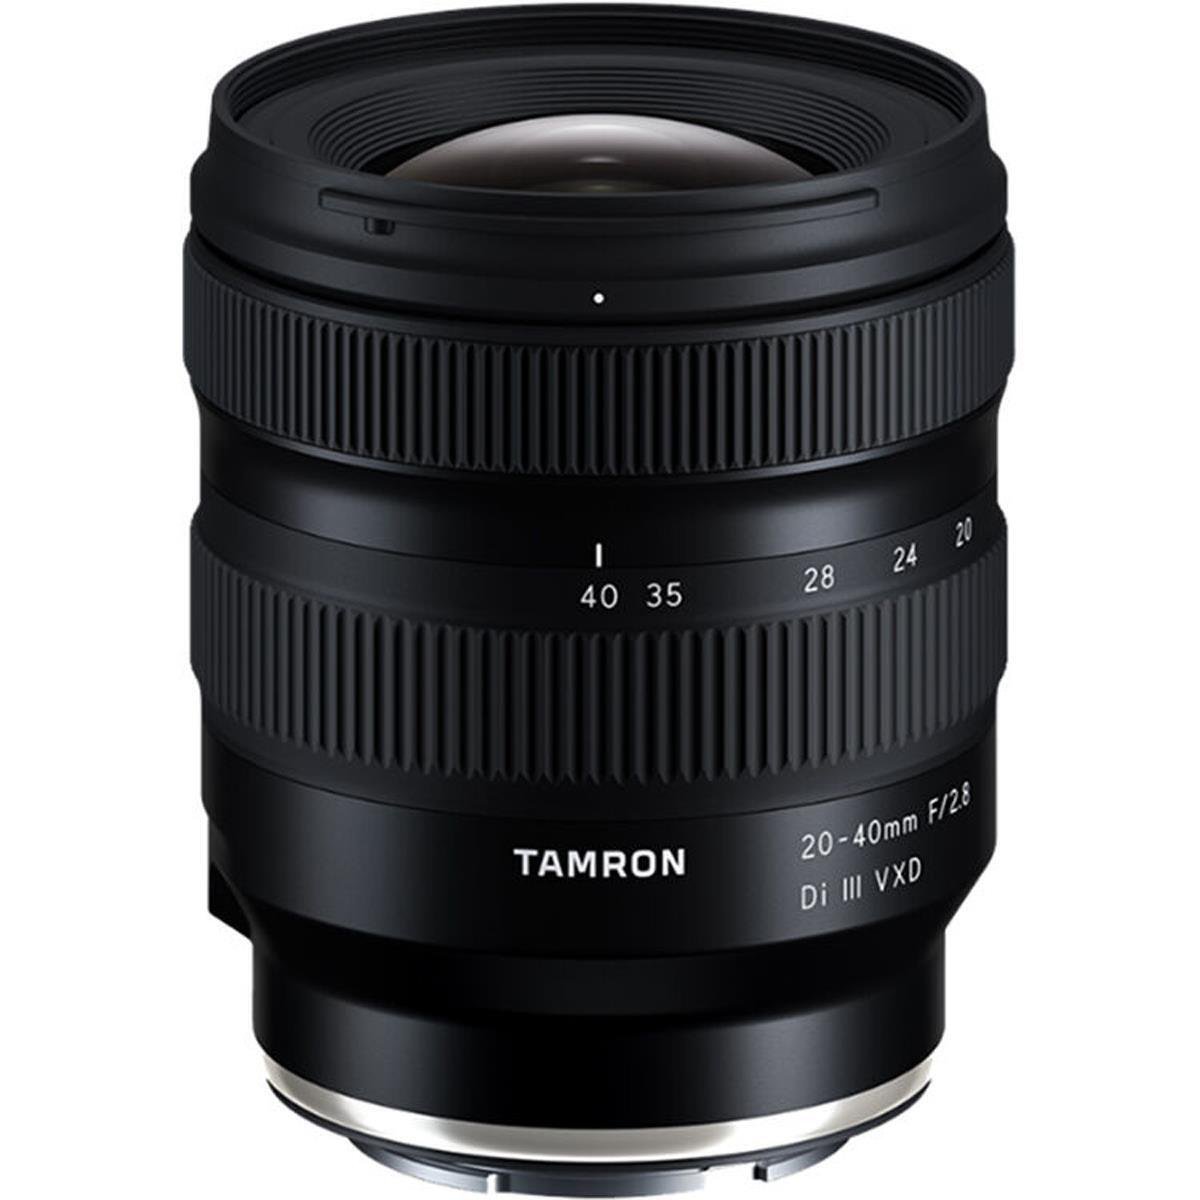 Tamron 20-40mm f/2.8 Di III VXD Lens for Sony E #AFA062S-700